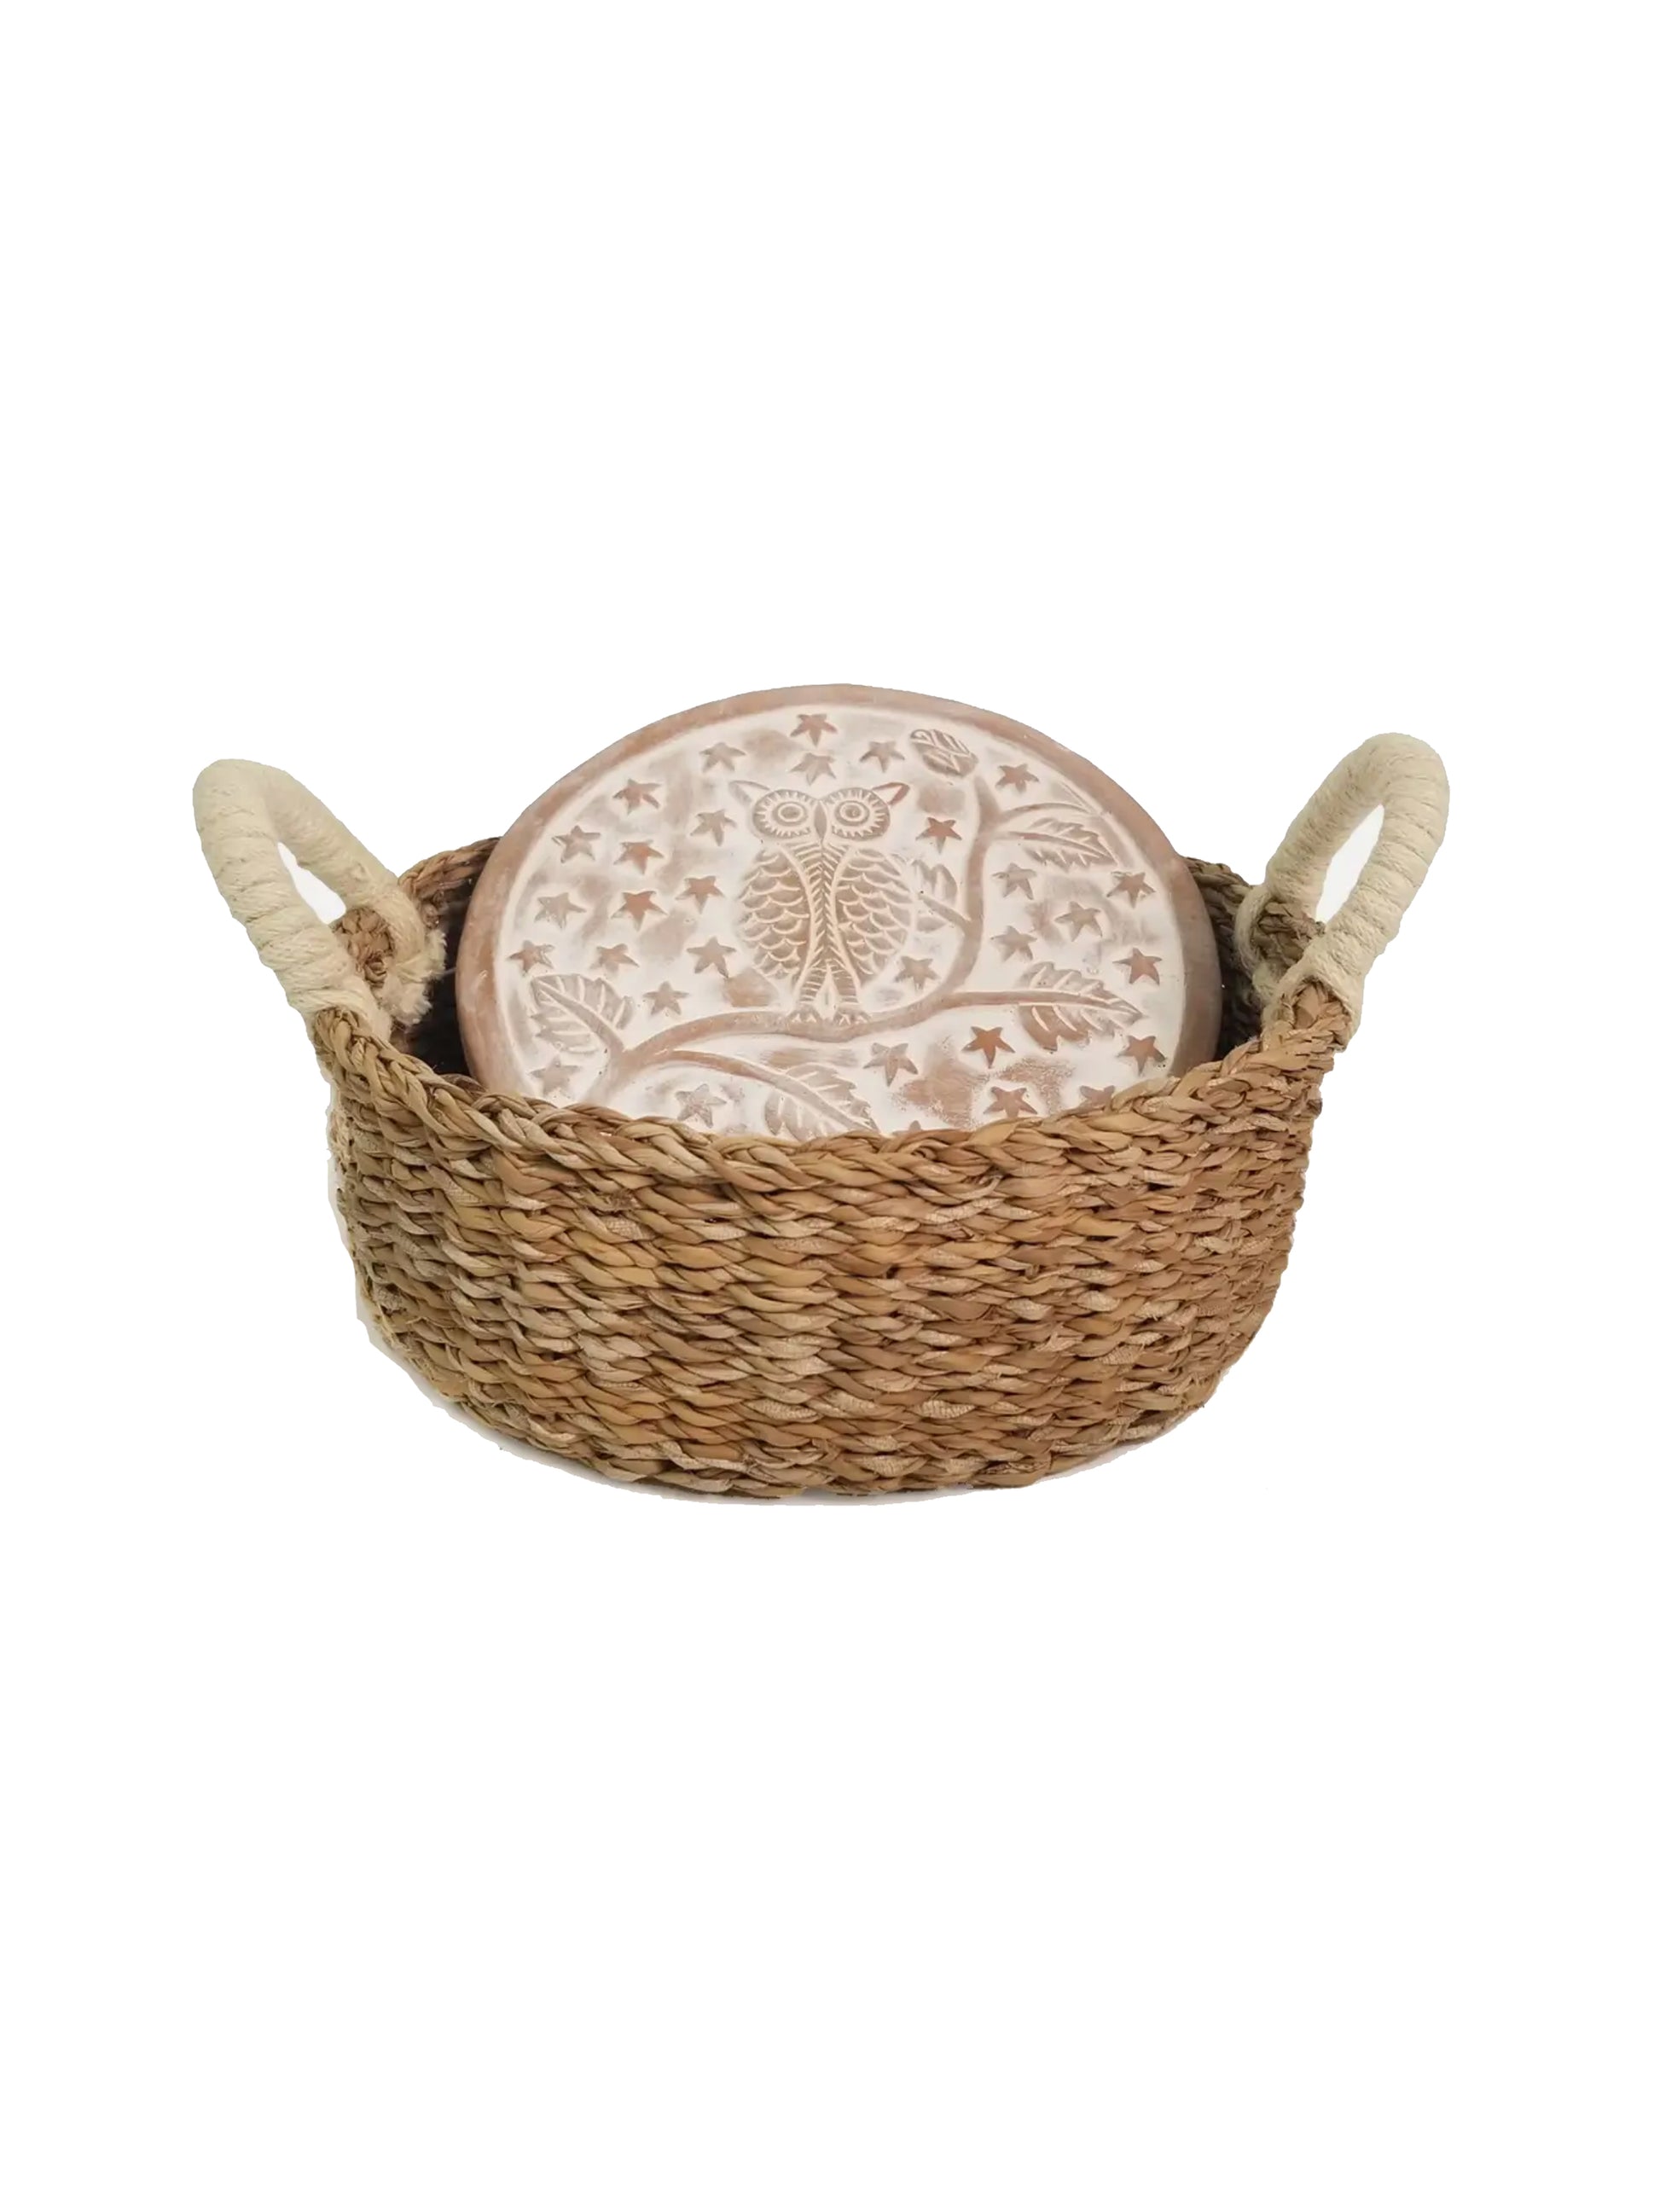 Owl-Bread-Warmer-and-Wicker-Basket-Round-Weston-Table